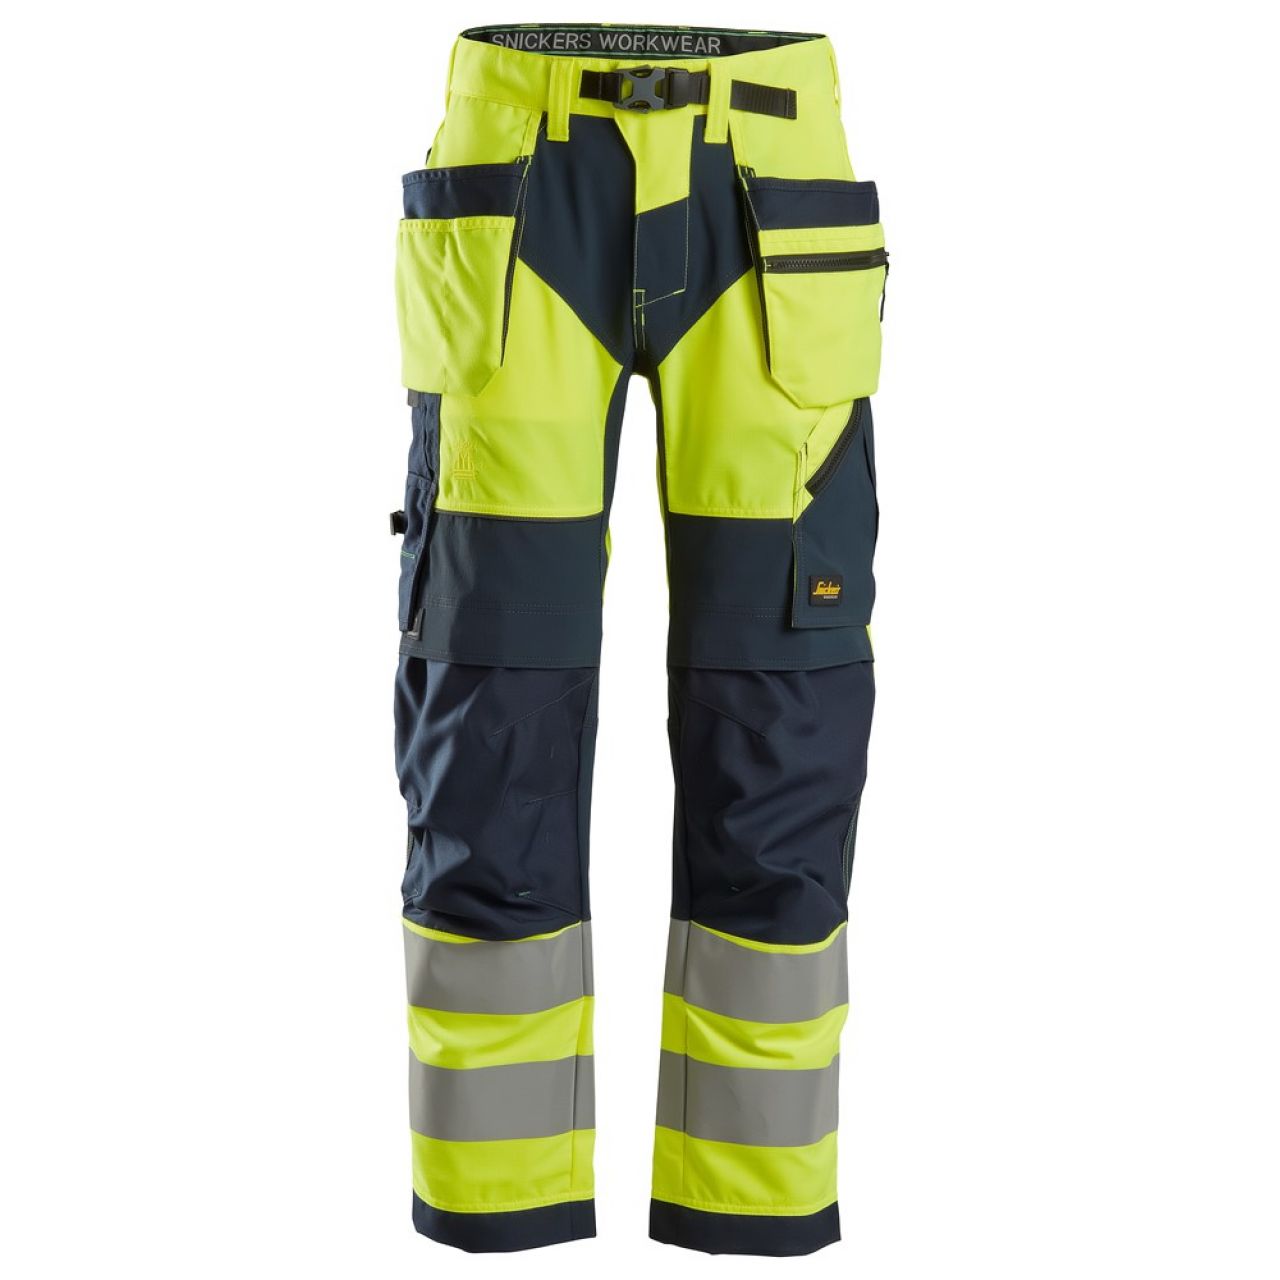 6932 Pantalones largos de trabajo de alta visibilidad clase 2 con bolsillos flotantes FlexiWork amarillo-azul marino talla 124